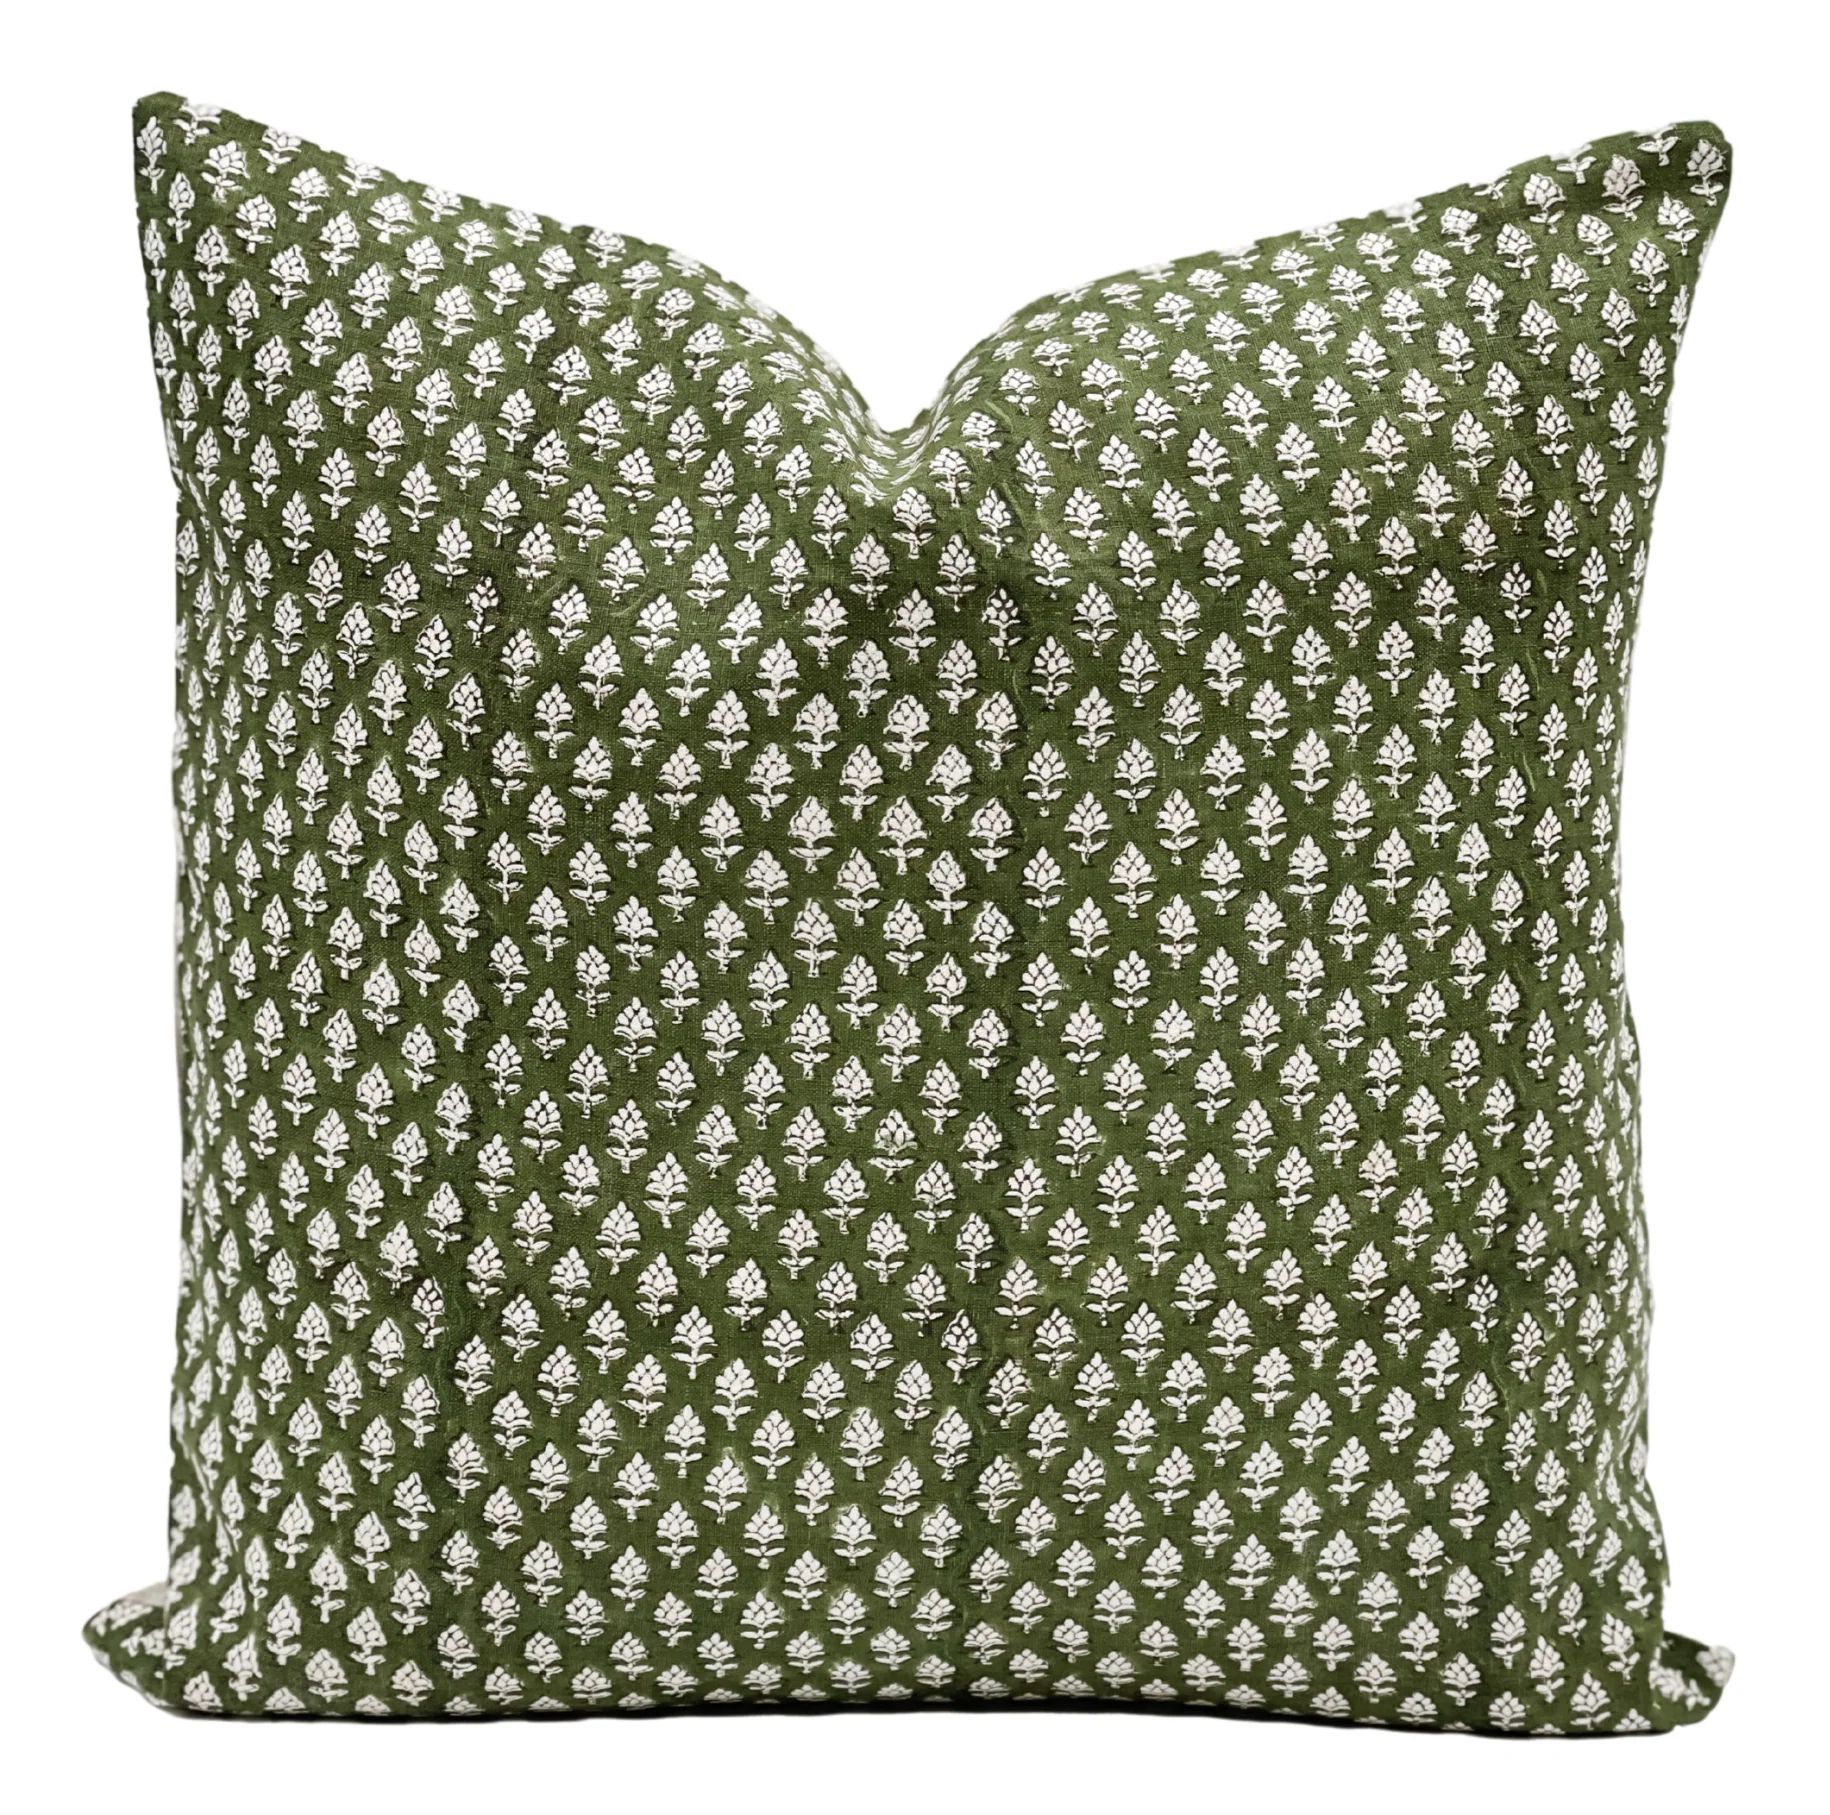 VIRGINIA IN Green Floral Pillow Cover | Krinto